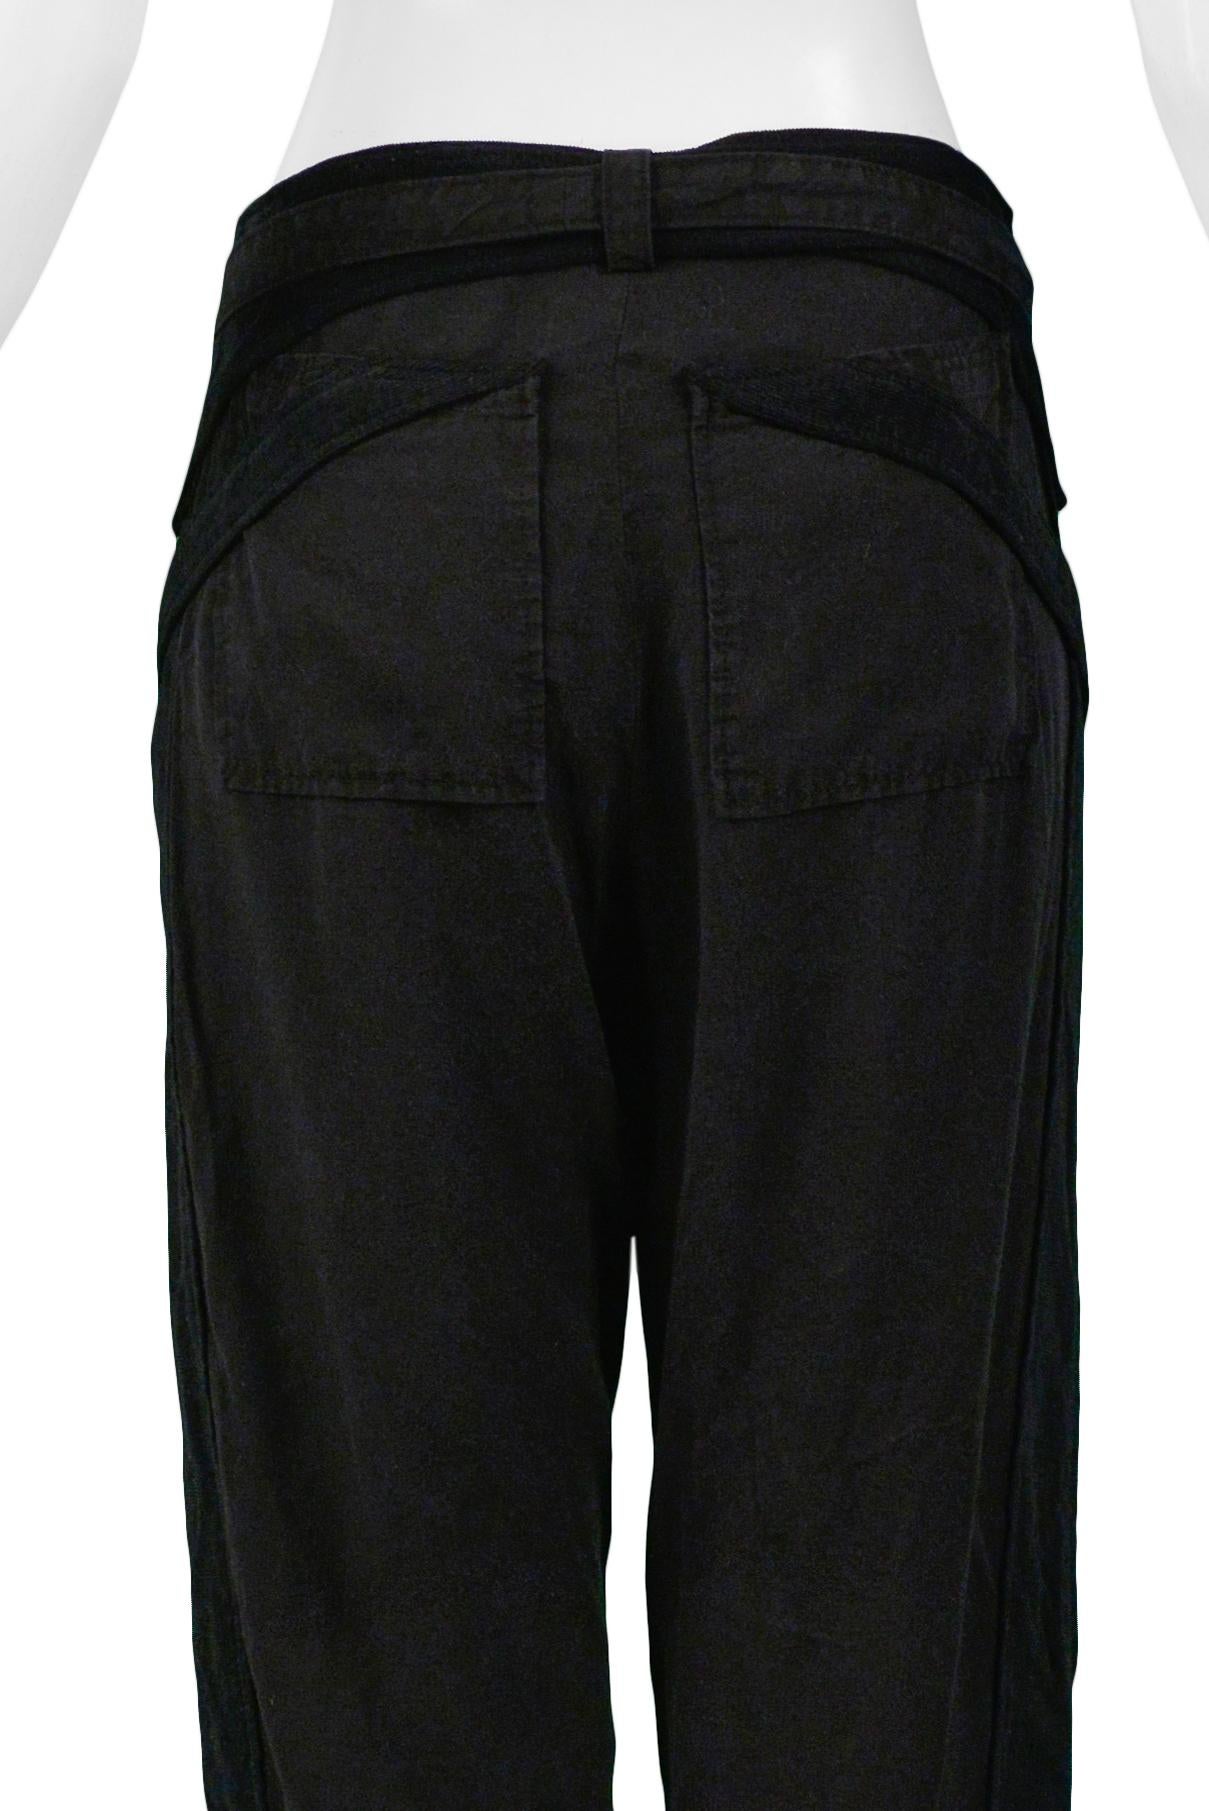 Women's Iconic Balenciaga by Ghesquiere Black Cargo Pants 2002